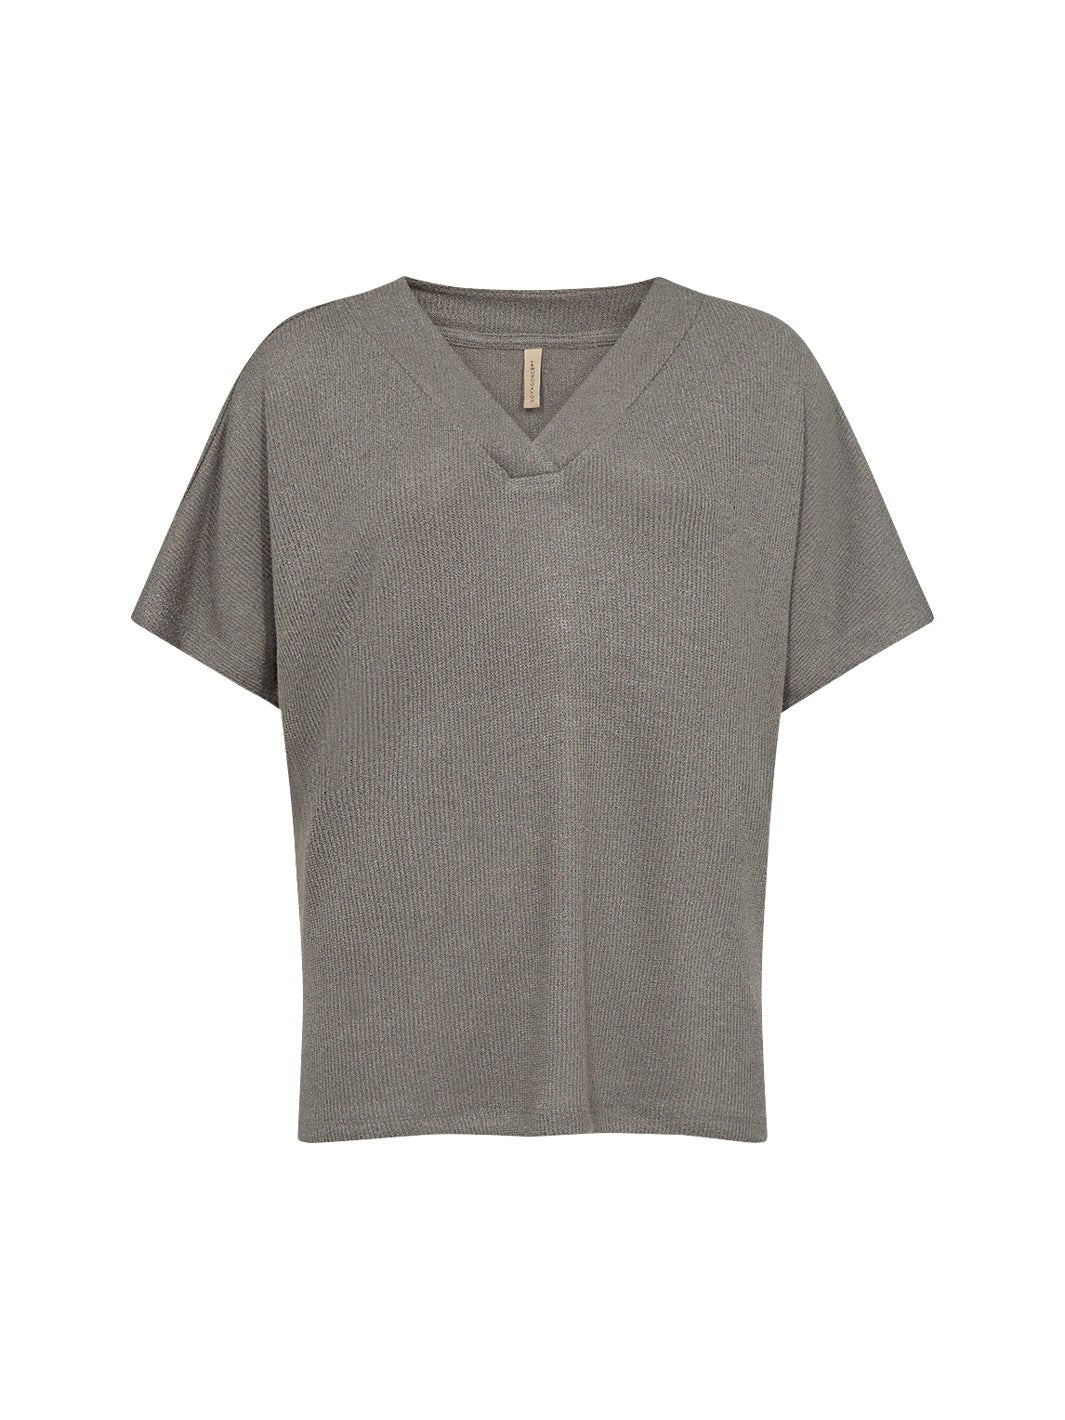 Soya Concept Delia 1 t-shirt dusty olive - Online-Mode